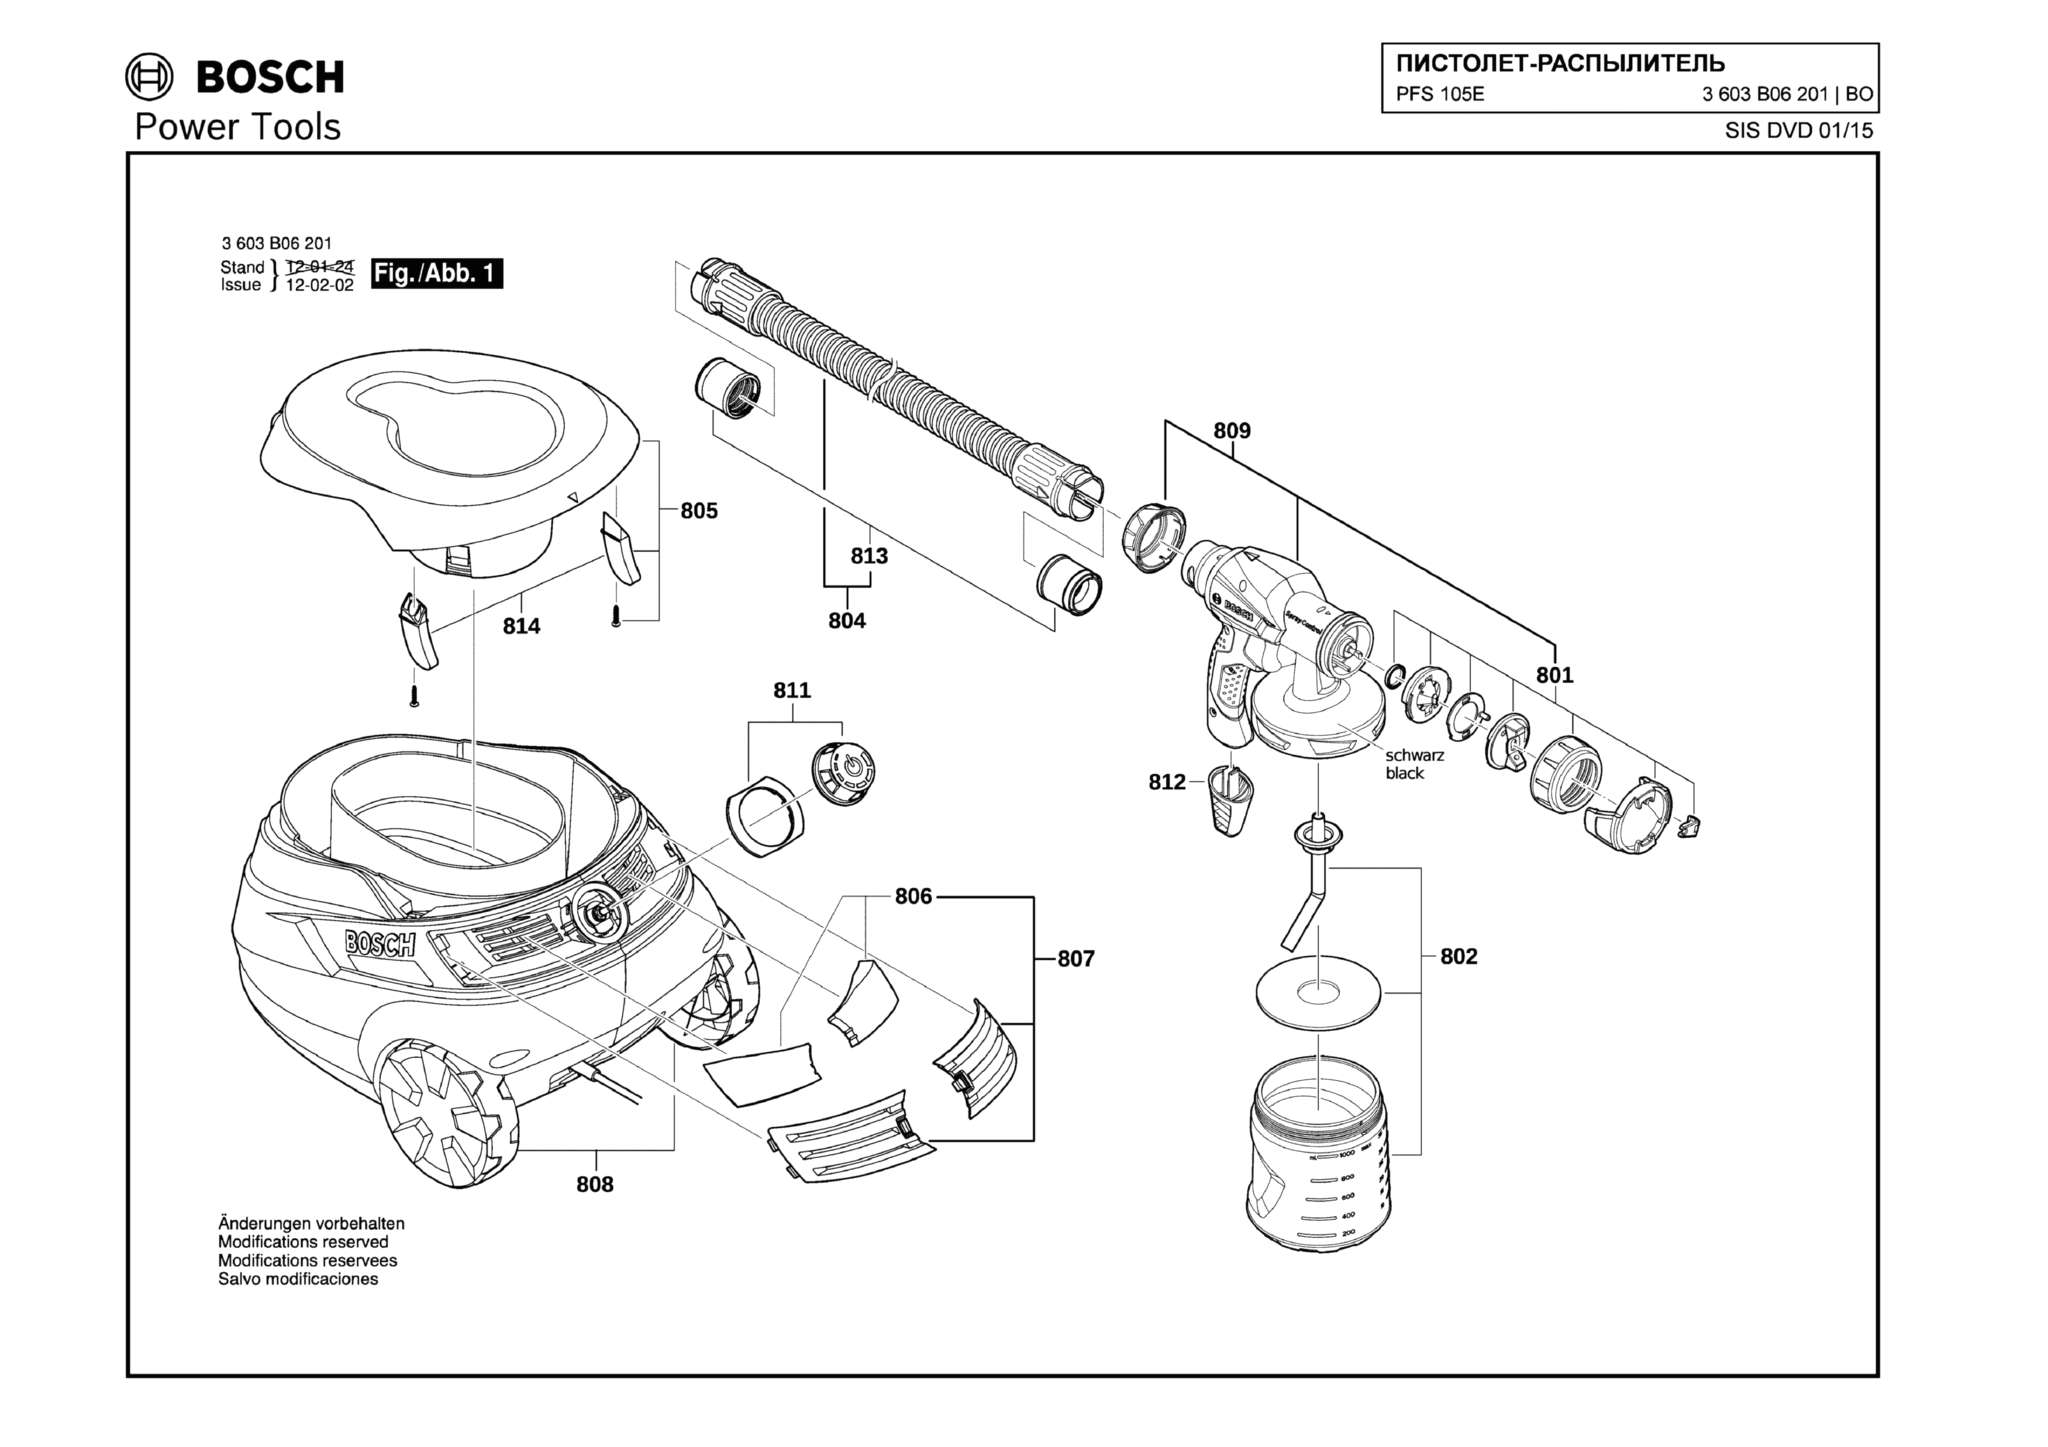 Запчасти, схема и деталировка Bosch PFS 105E (ТИП 3603B06201)